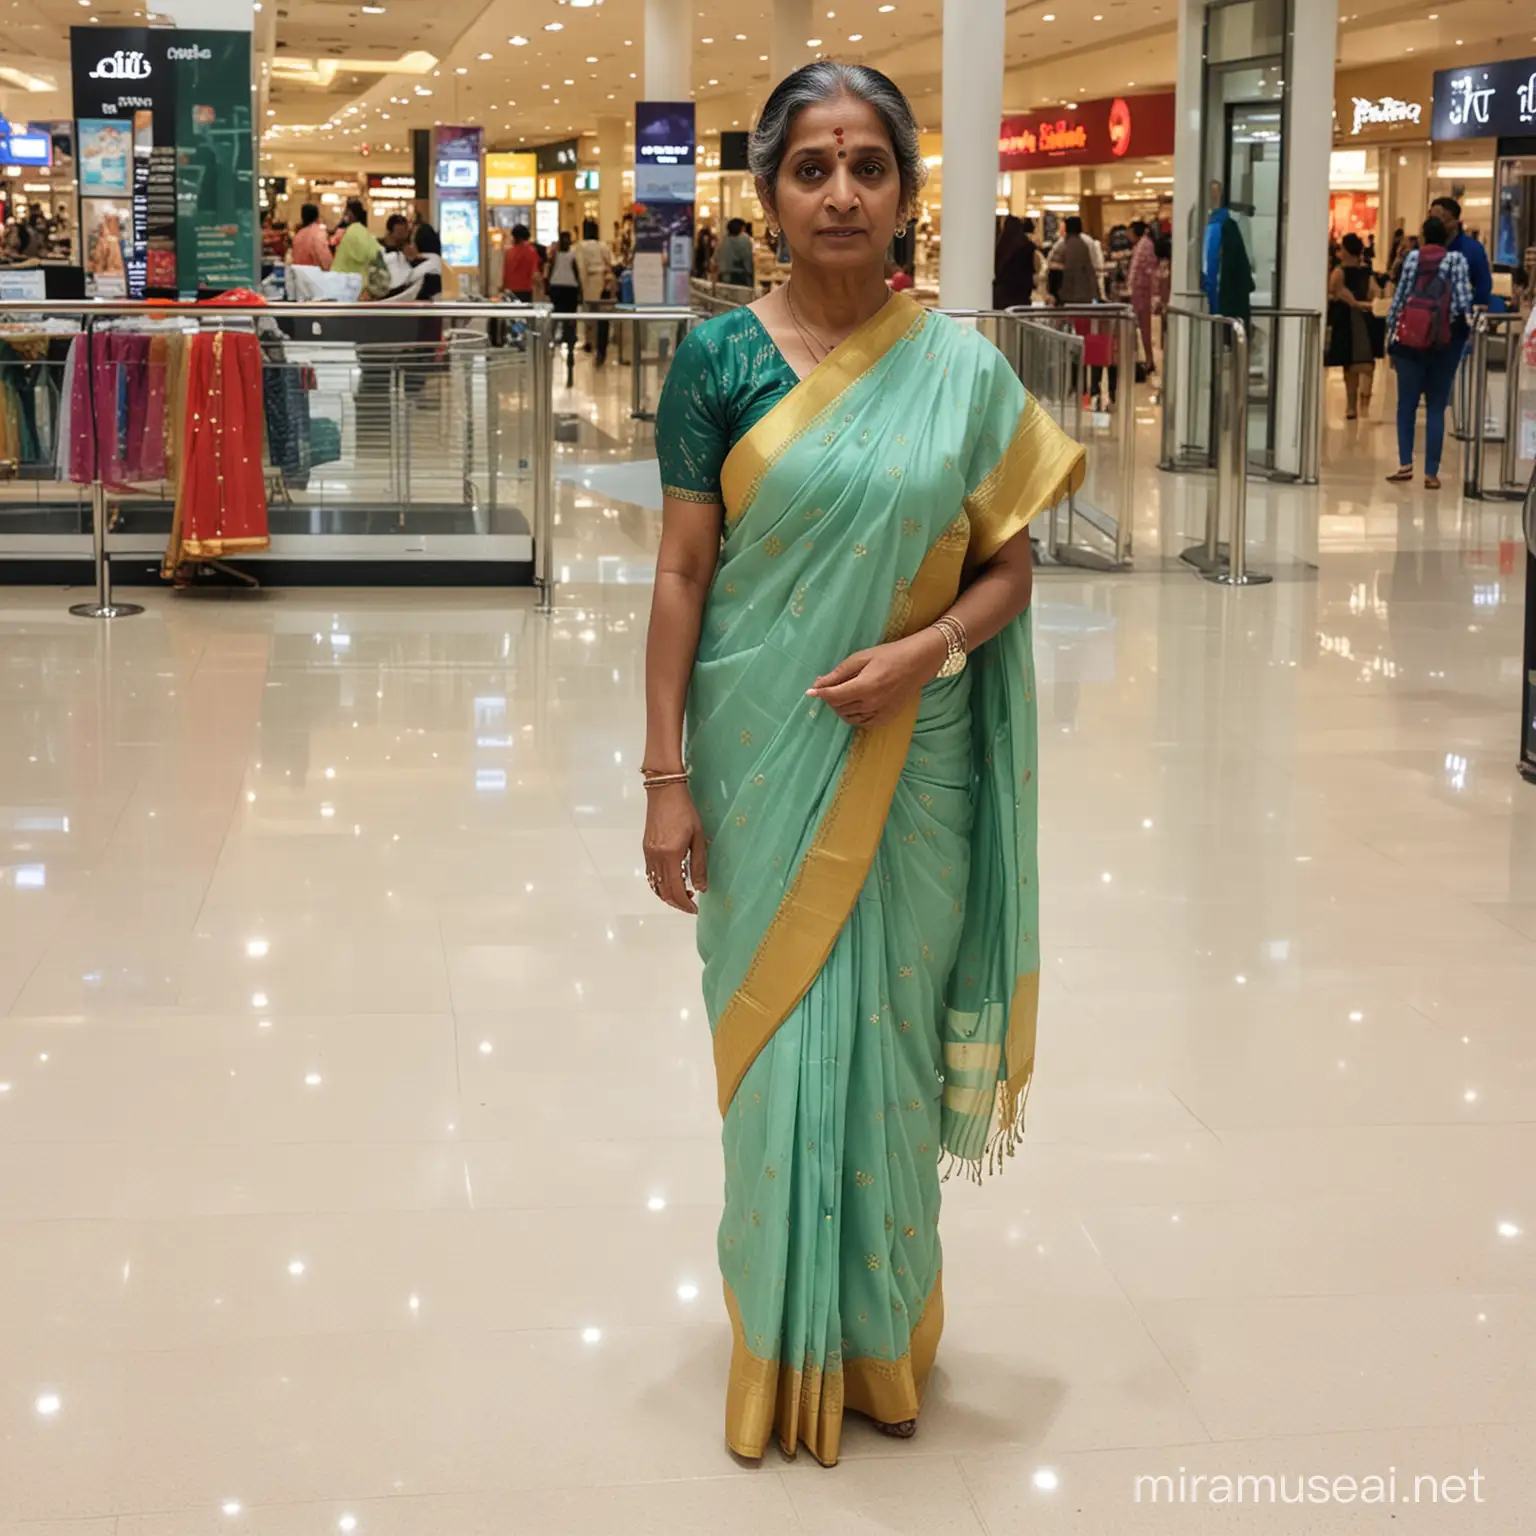 Tired Indian Woman in Saree Walking Through Mall